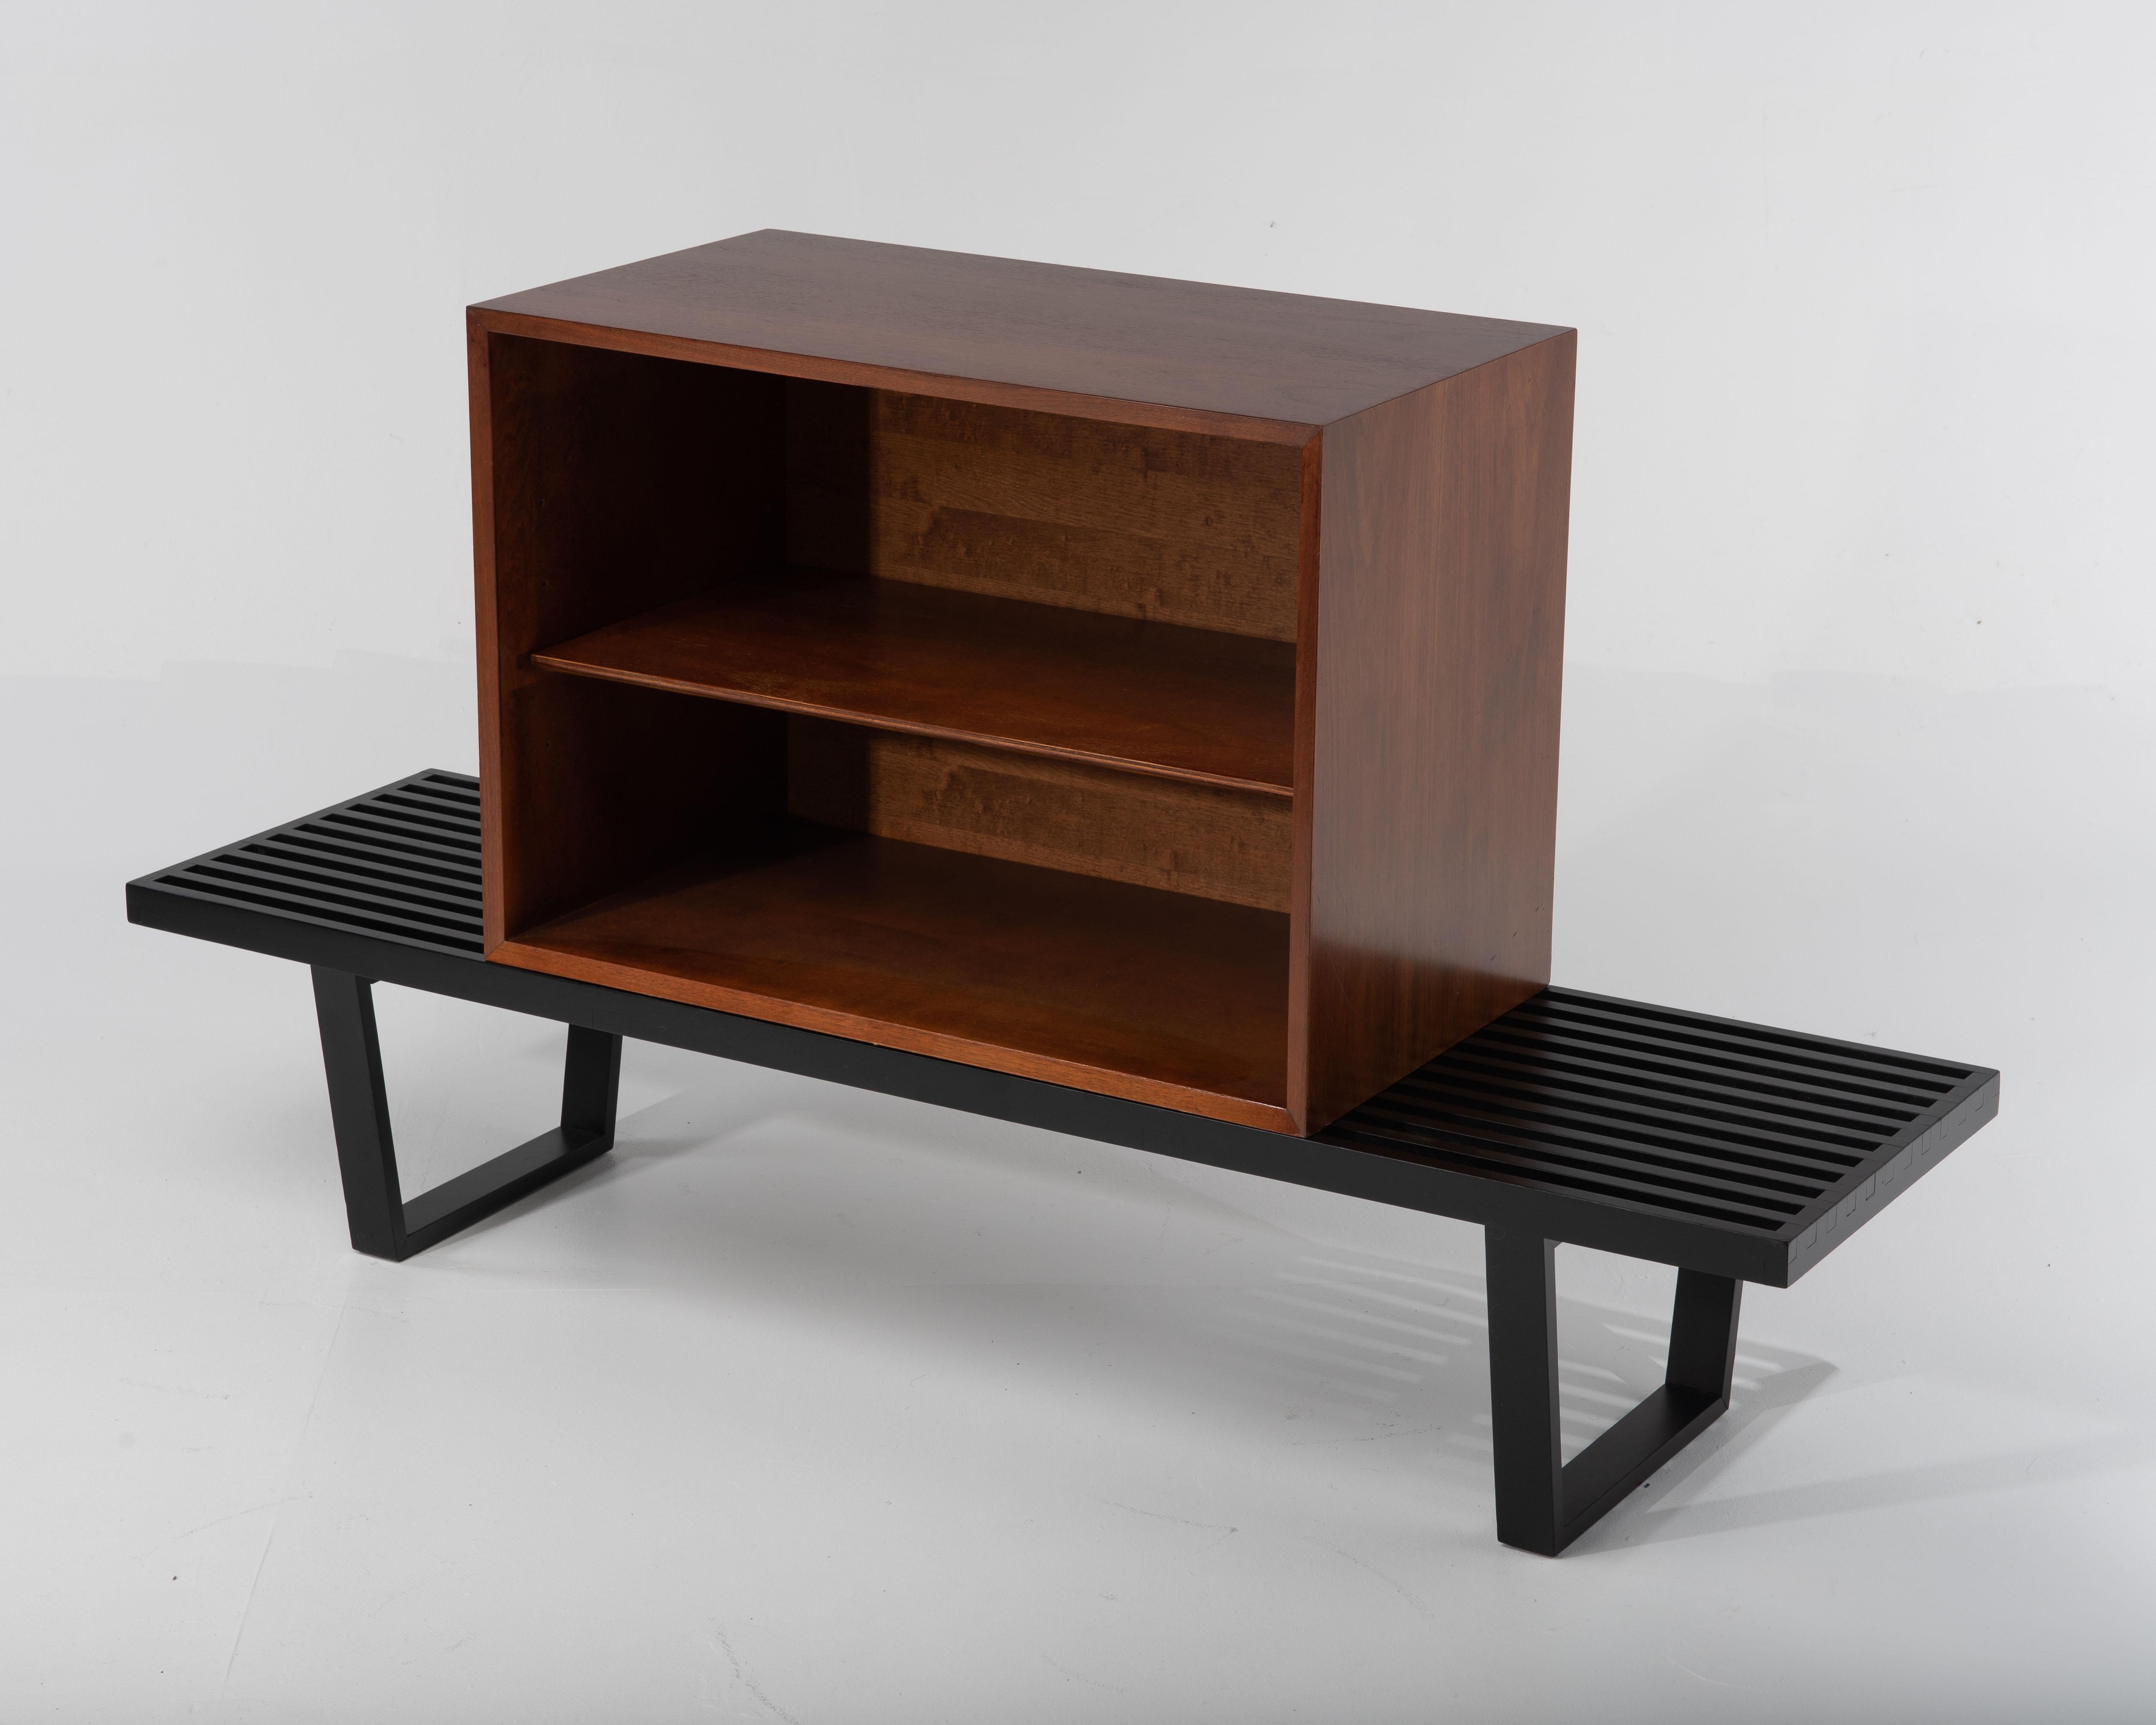 Rare 1960s George Nelson for Herman Miller cabinet set upon an1 iconic Herman Miller slat ebonized bench.